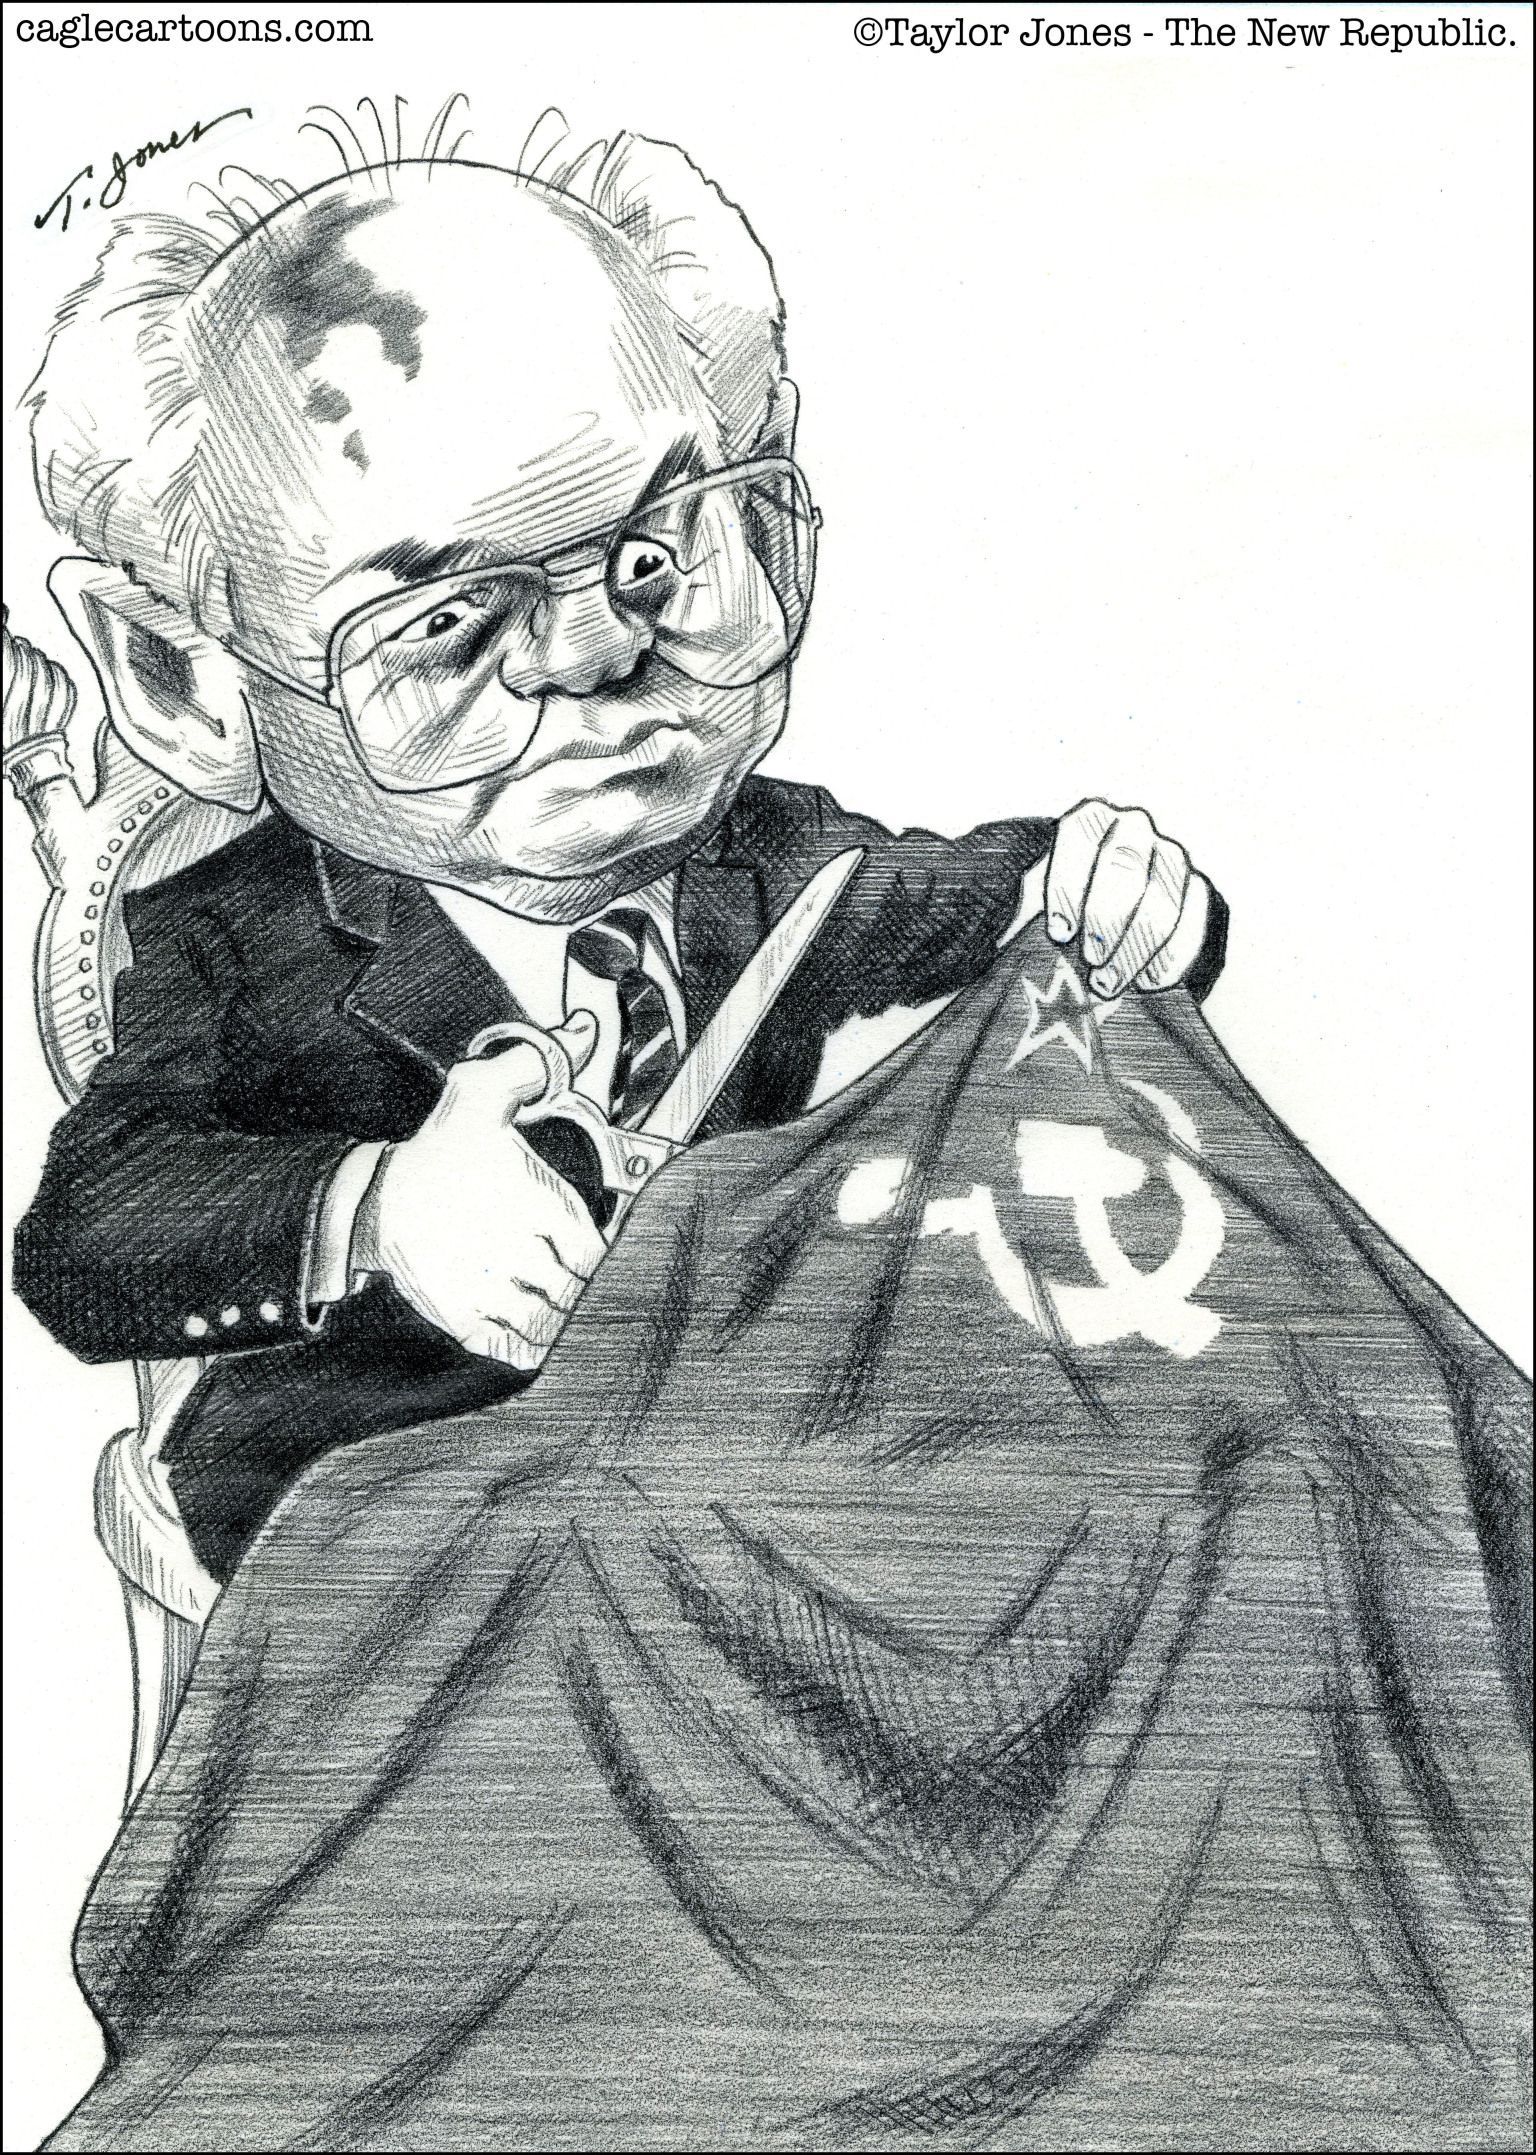 Mikhail Gorbachev 1931 2022 - newsjustin.press - editorial cartoon